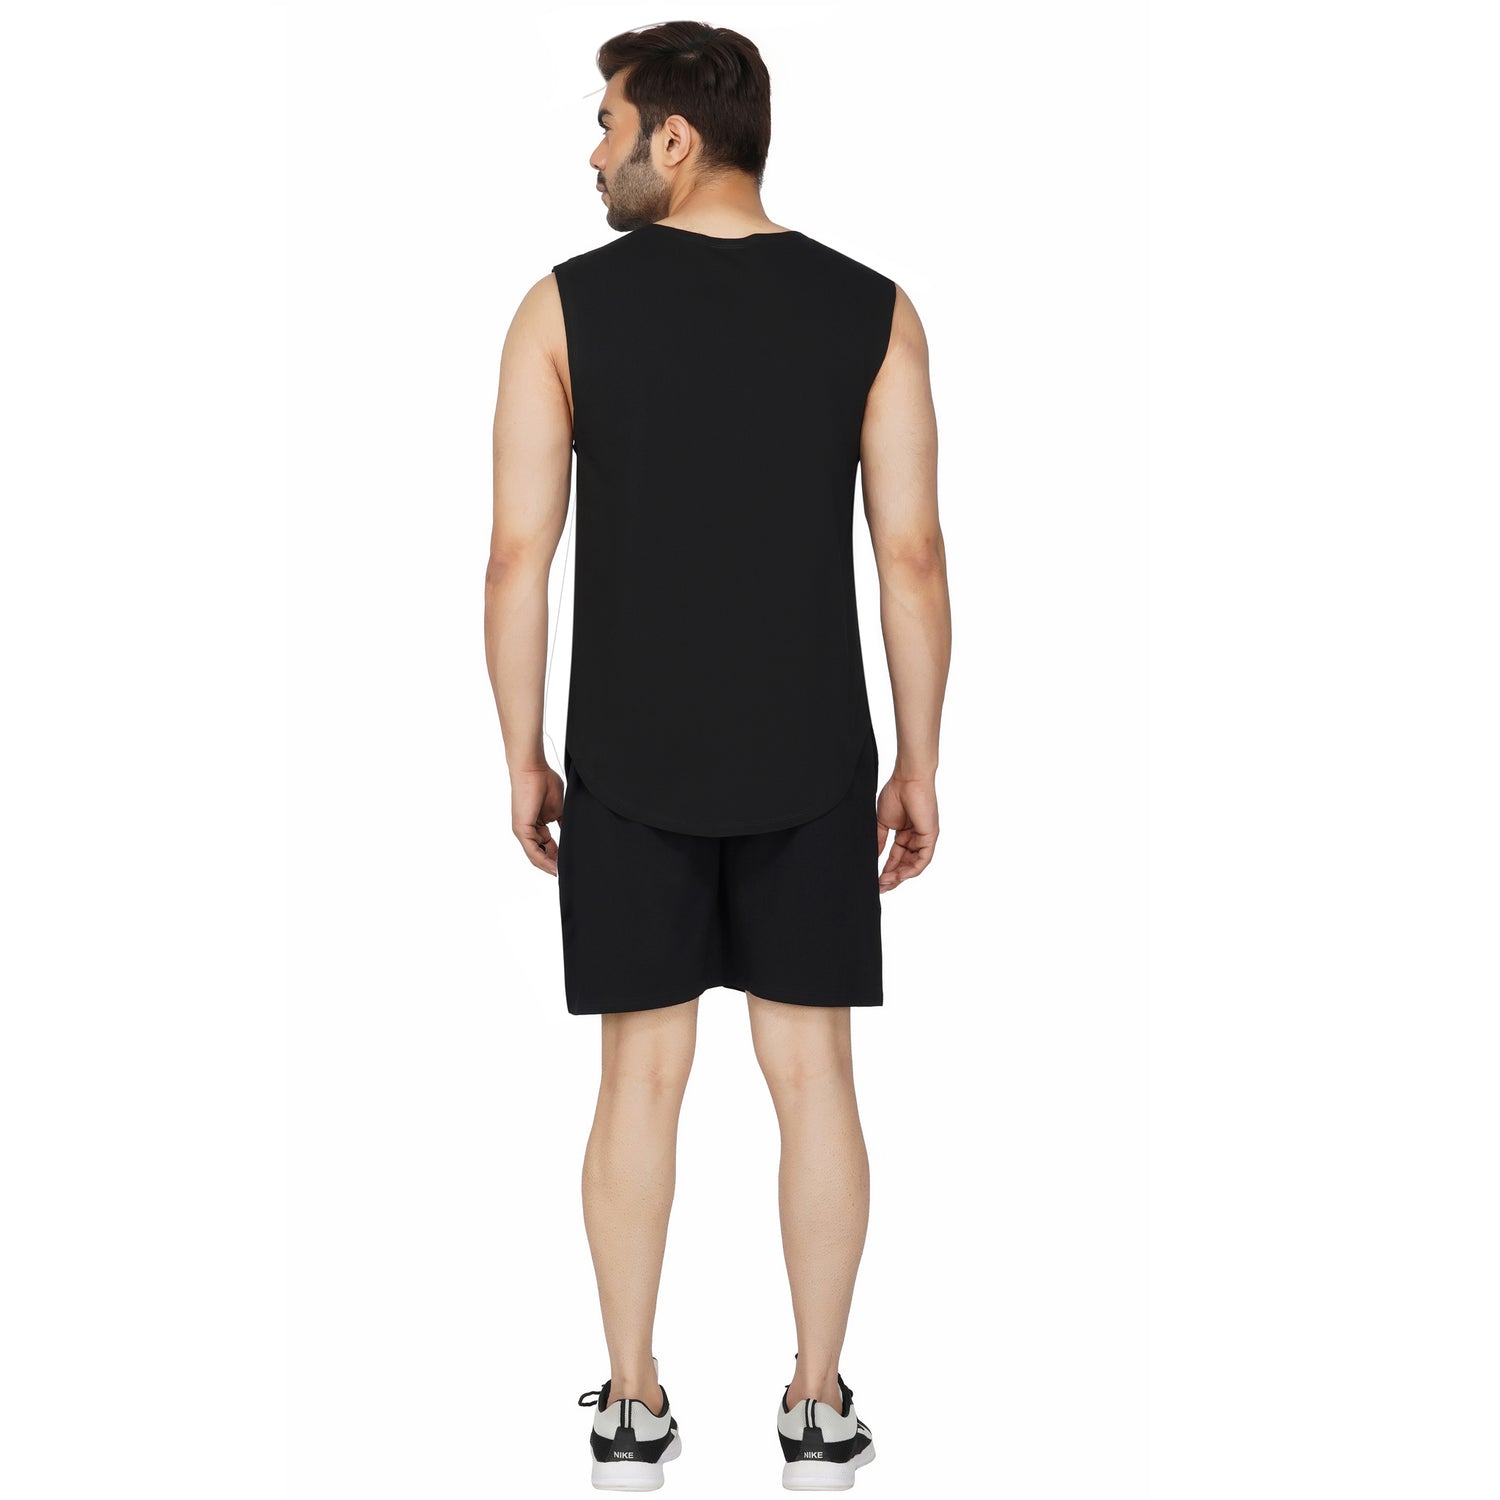 SLAY. Men's Black Shorts with White Stripes-clothing-to-slay.myshopify.com-Joggers